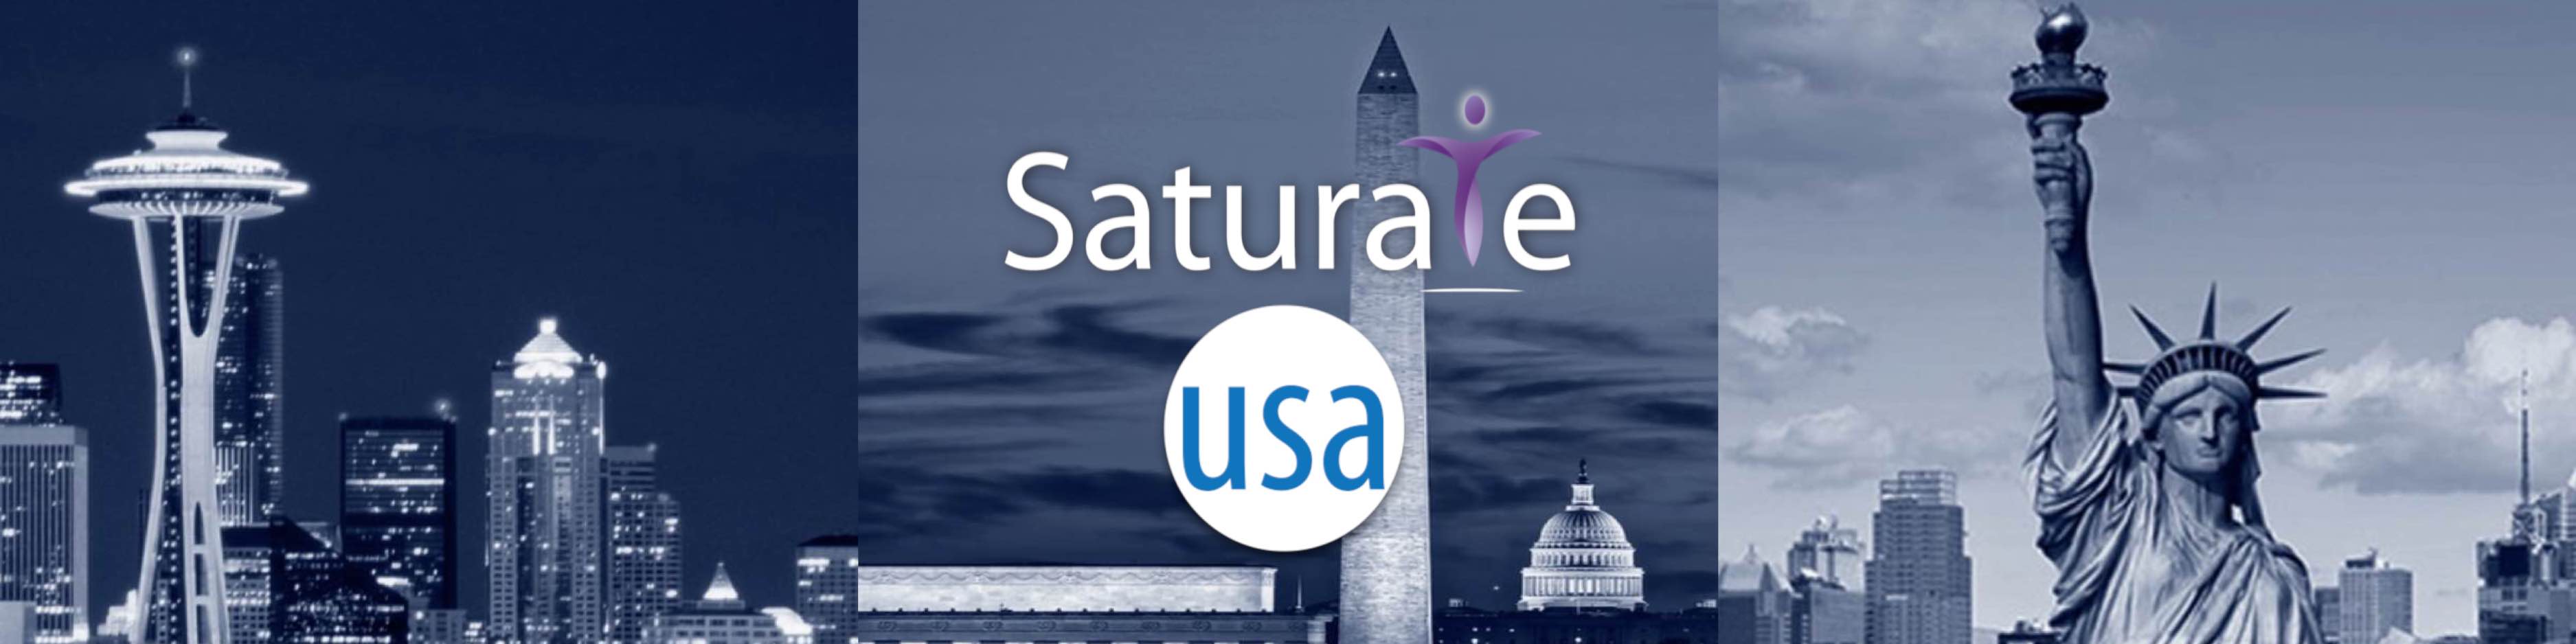 Saturate Usa Logo